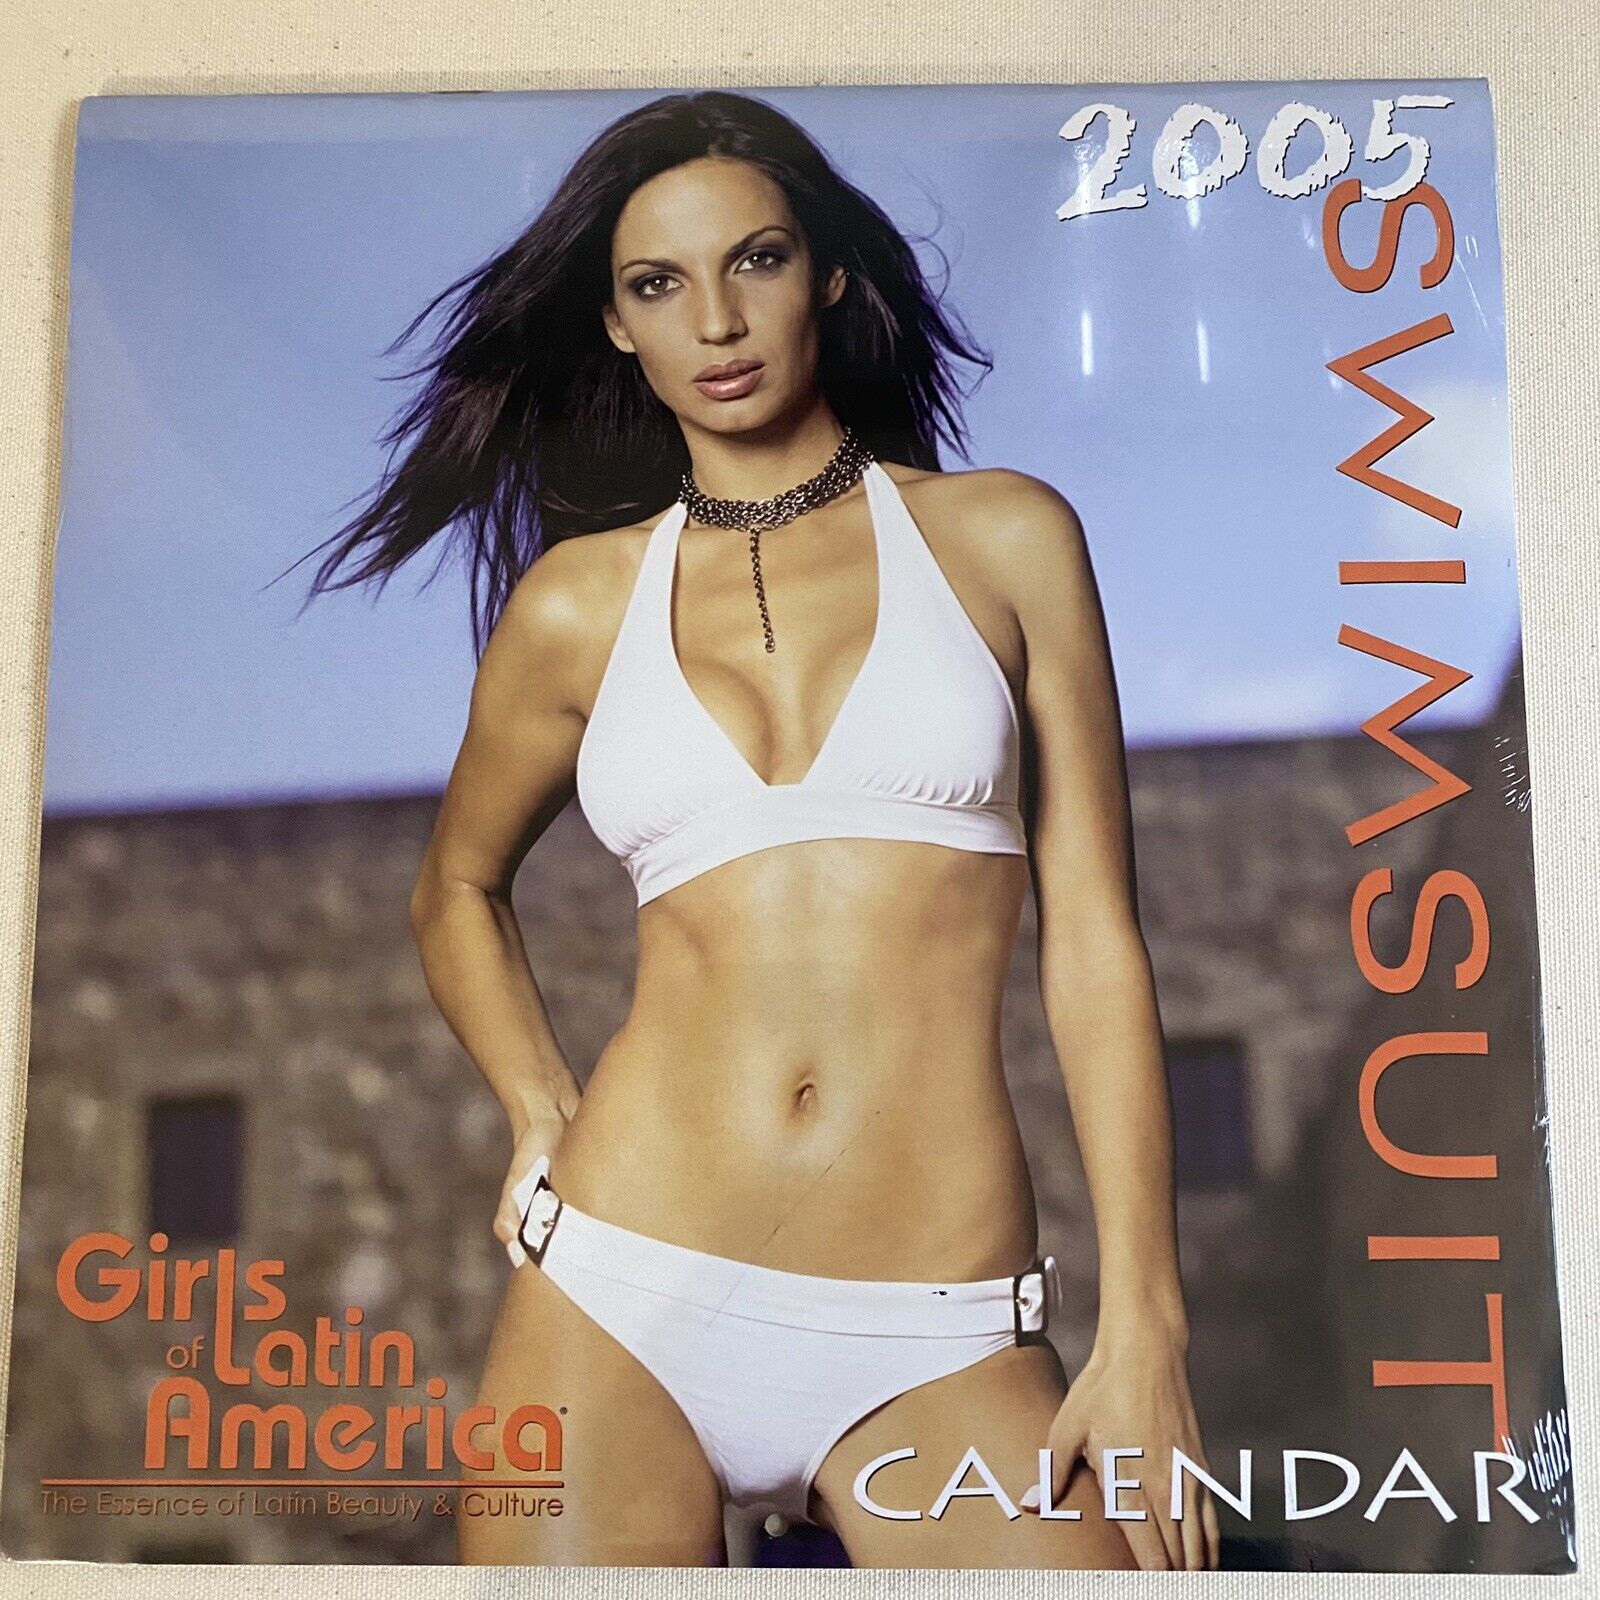 2005 Swimsuit Calendar girls of latin america beauty culture NEW sealed